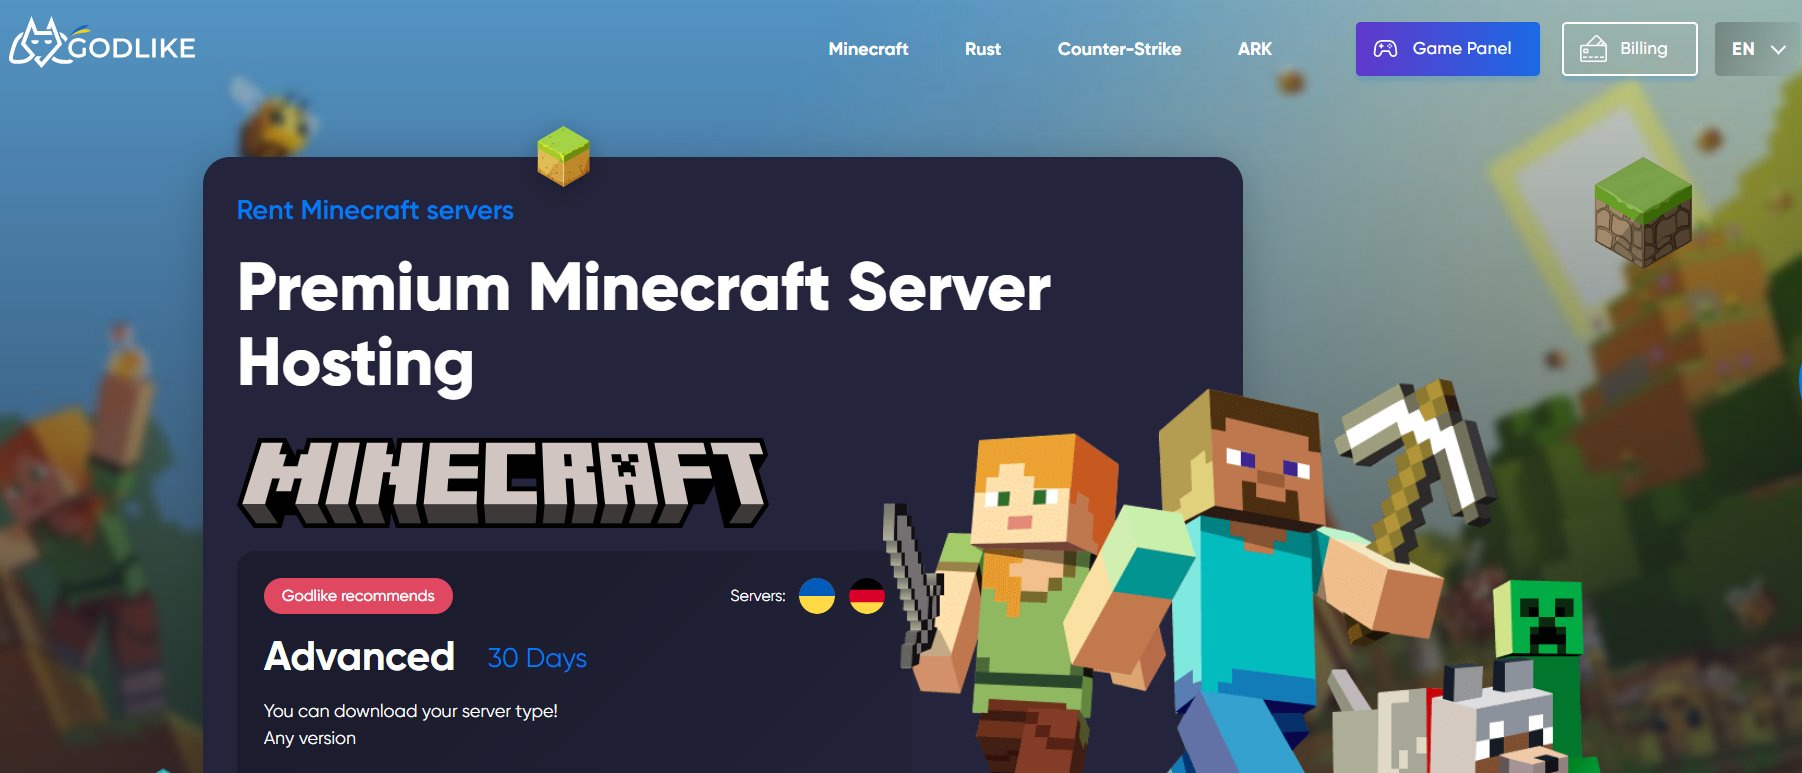 Free Minecraft Server Hosting  Importance of Free Minecraft Server